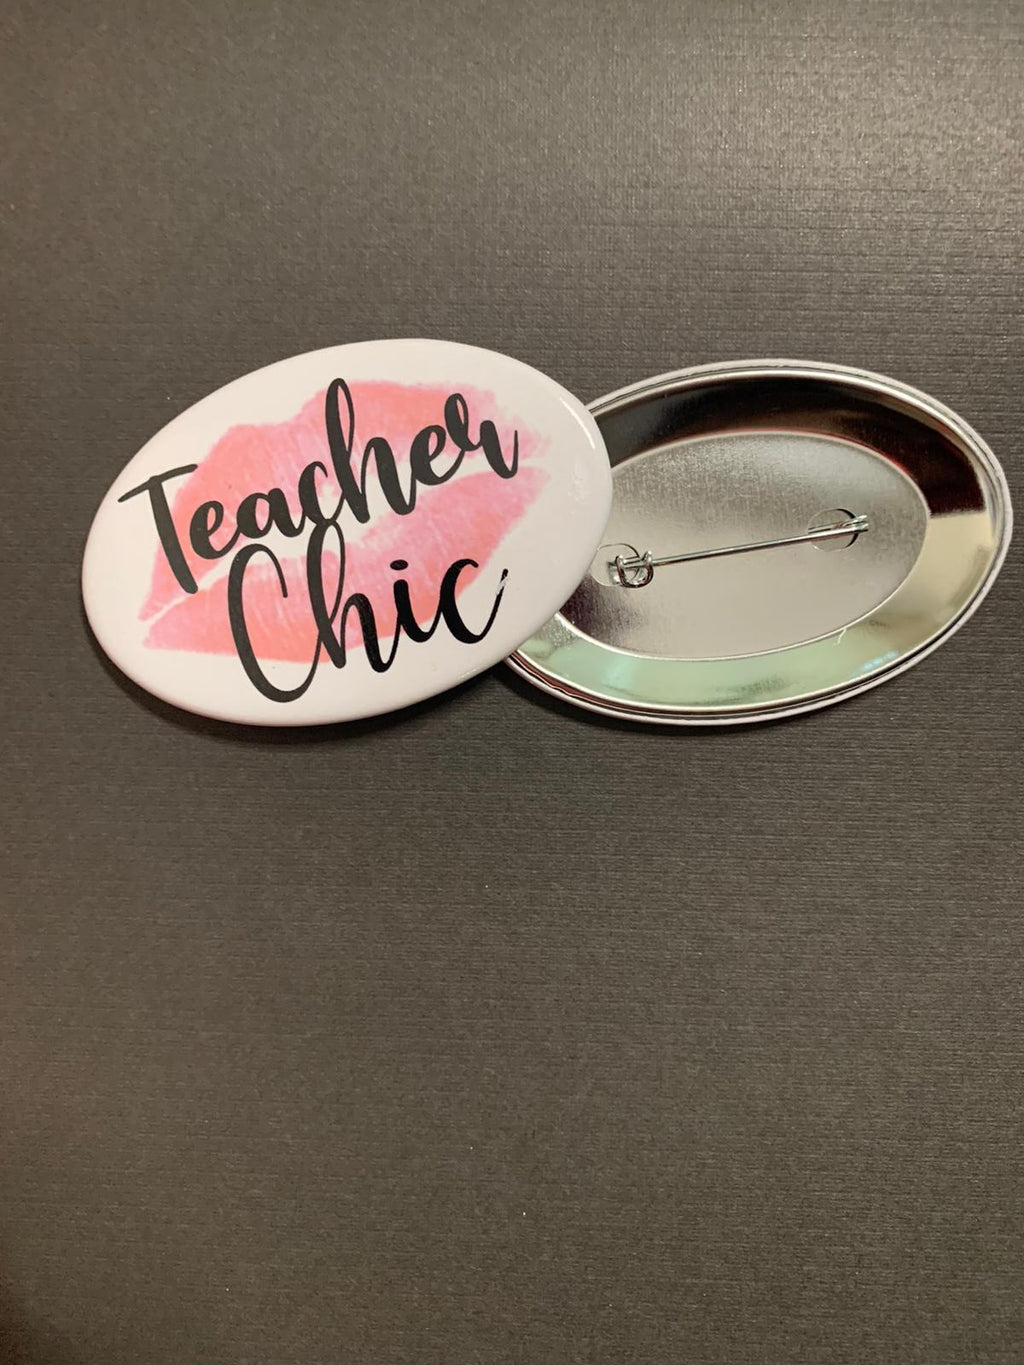 Teacher Chic Button